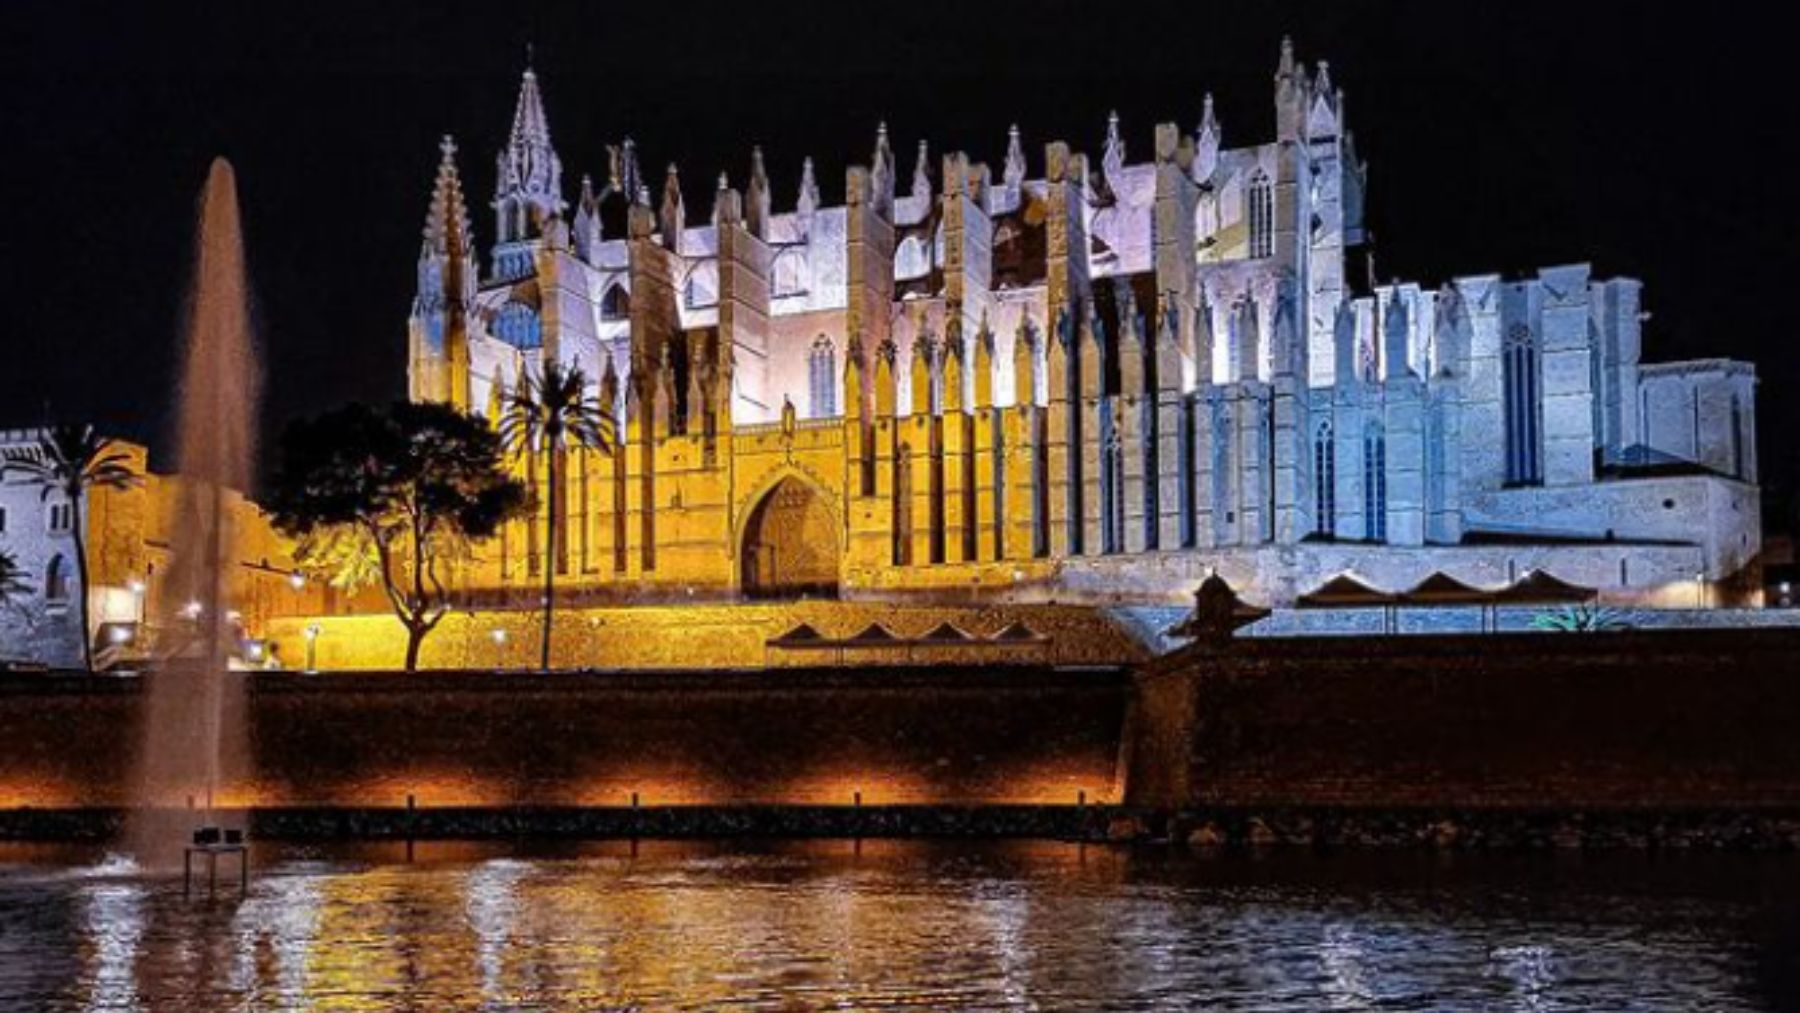 La espectacular catedral en España con maravillosas terrazas para ver el atardecer